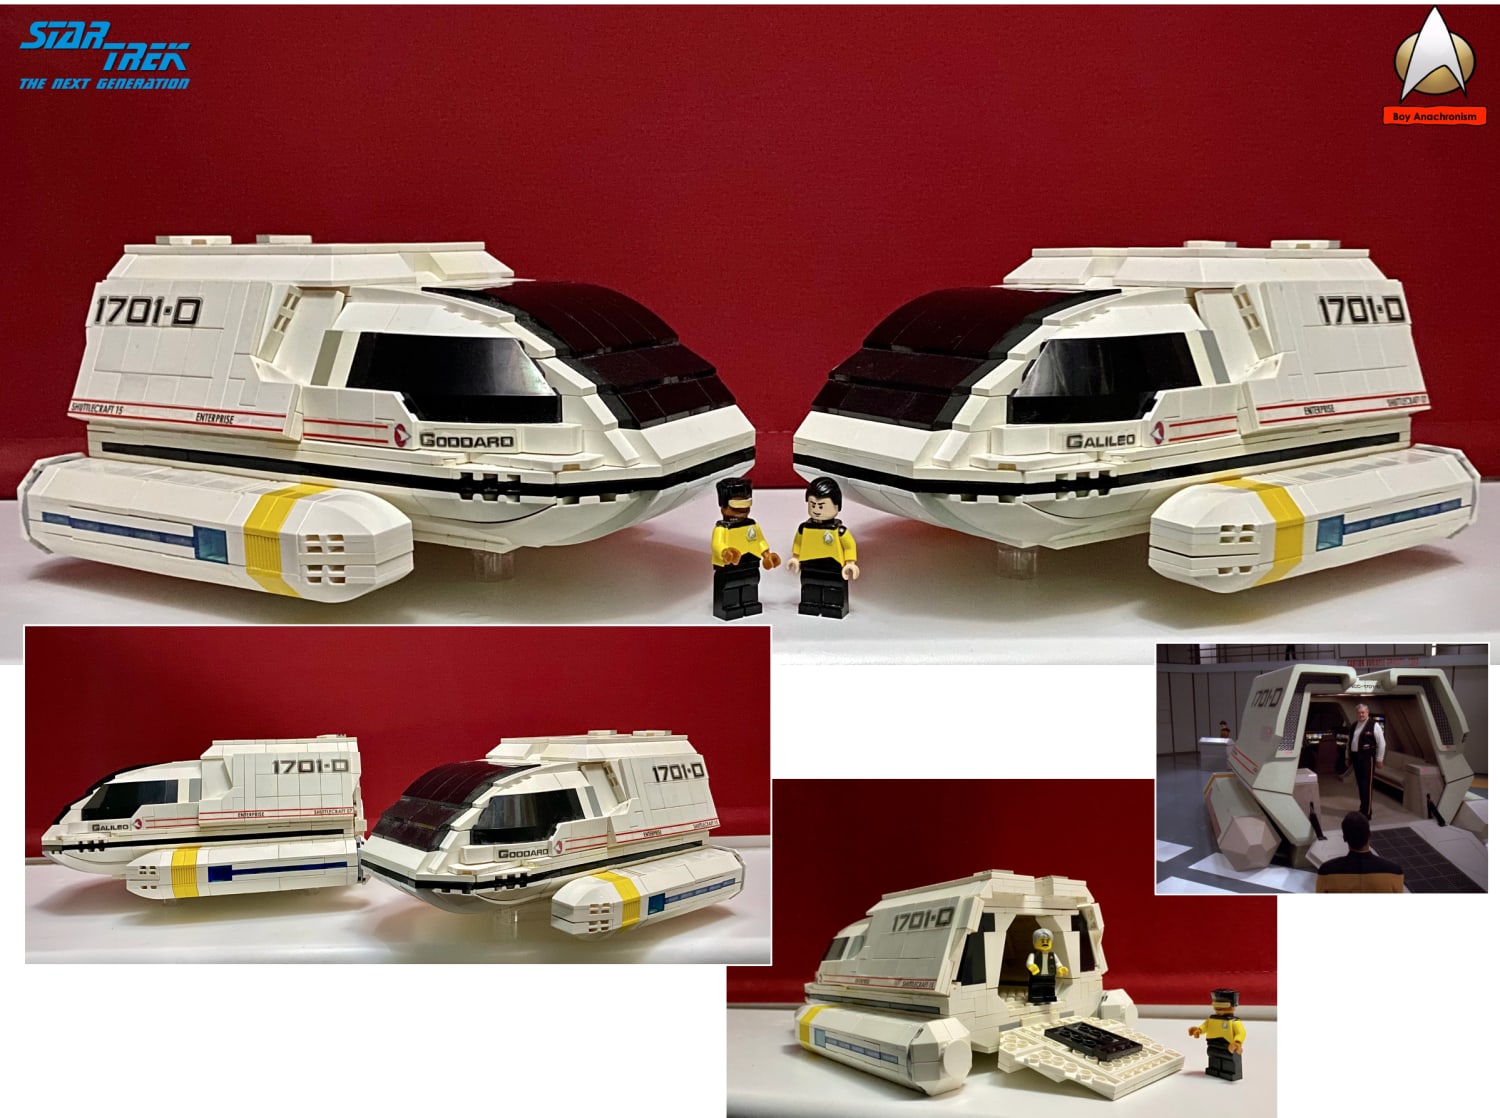 Star Trek Lego Shuttle Goddard and Galileo Type 6 from The Next Generation